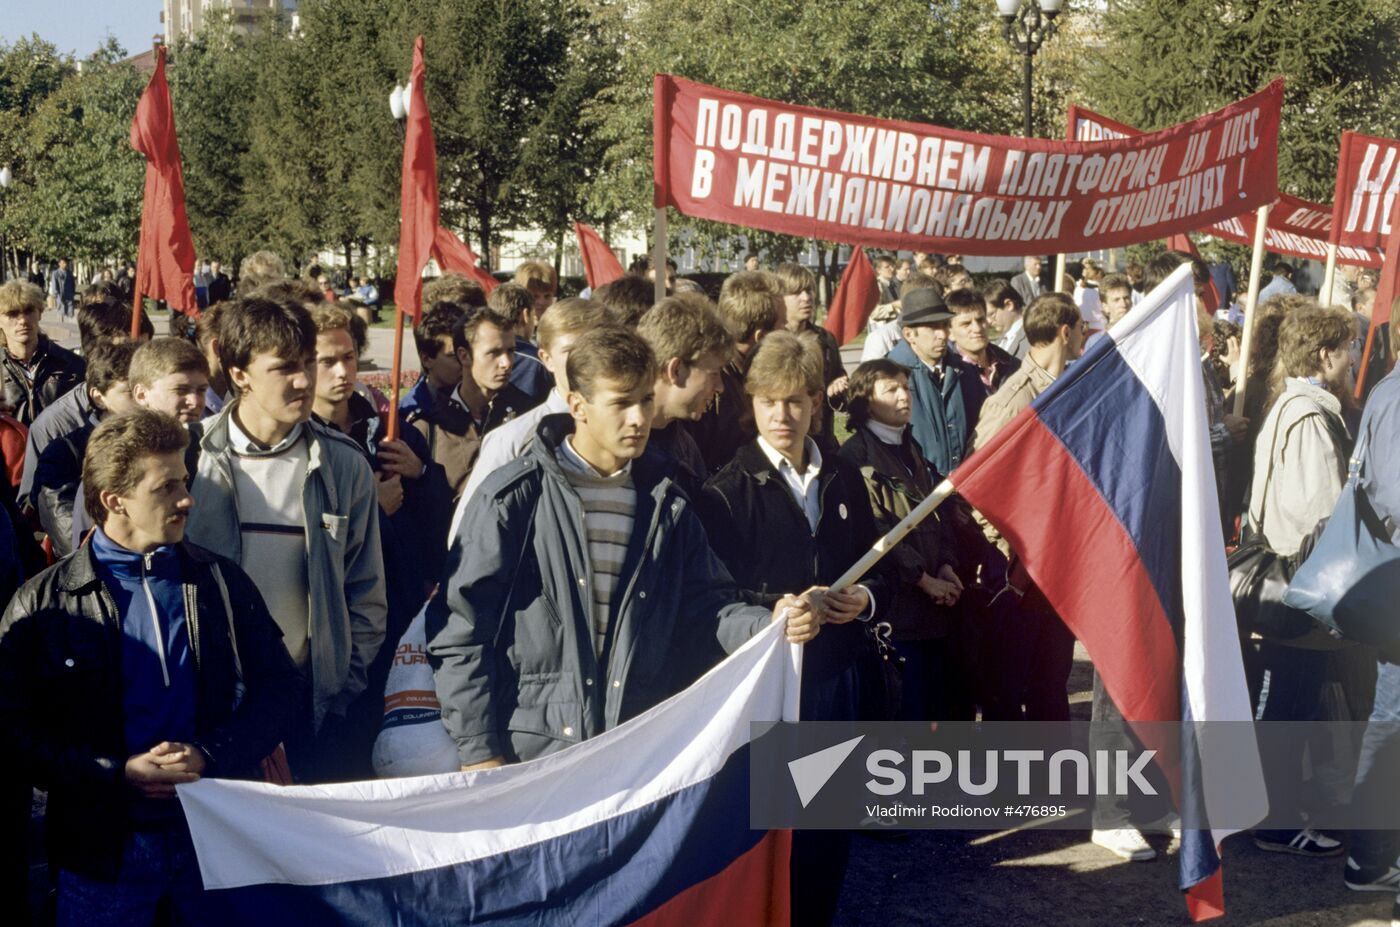 Rally in Pushkin Square